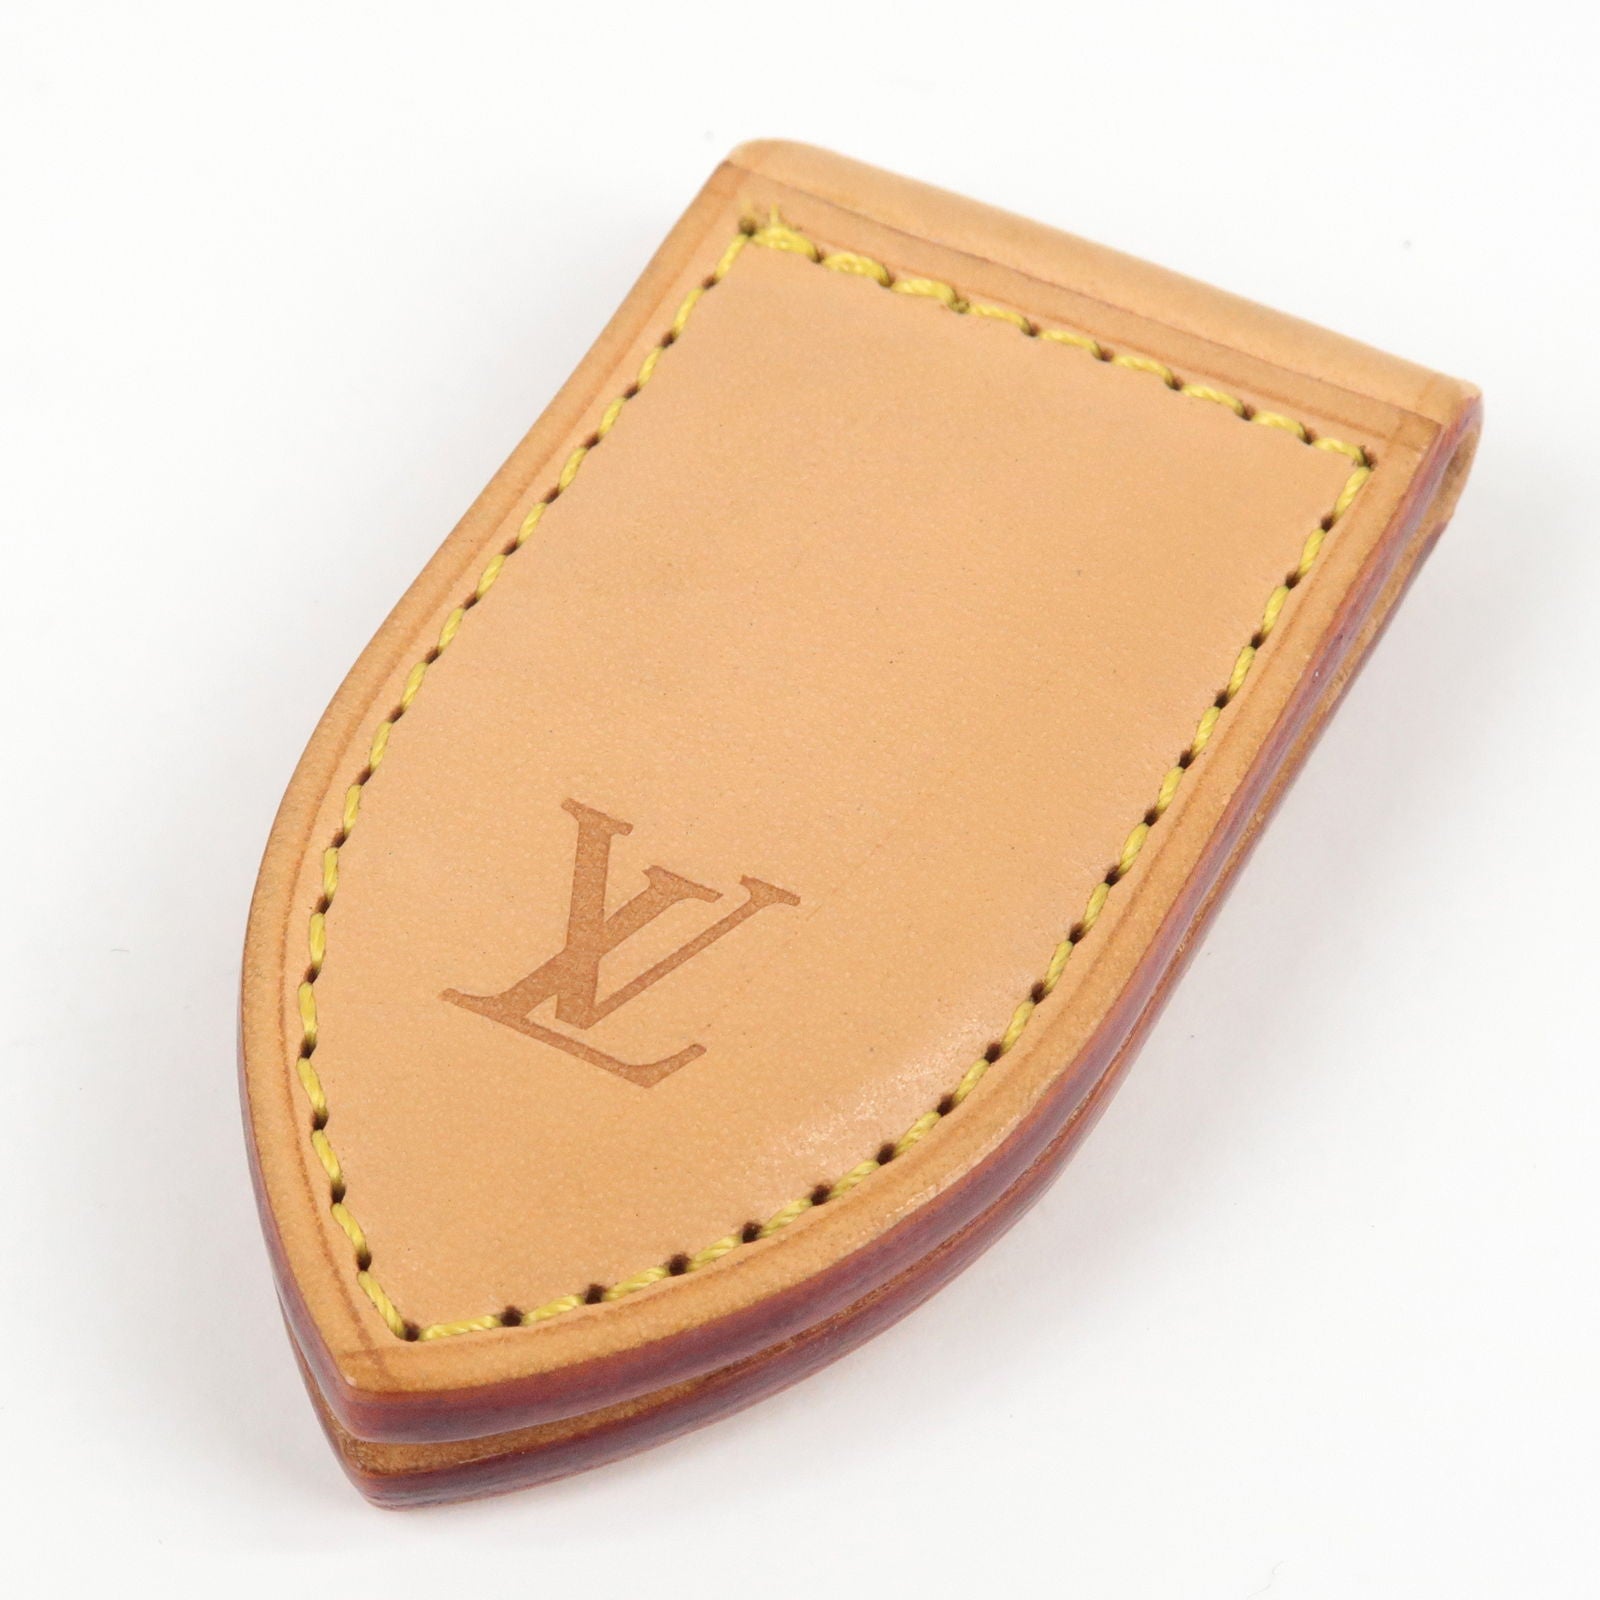 M64692 – dct - ep_vintage luxury Store - Bolsa de viaje Louis Vuitton Alize  en lona Monogram revestida marrón y cuero natural - Beige - Clip - A -  Louis - Billets - Vuitton - Money - Pince